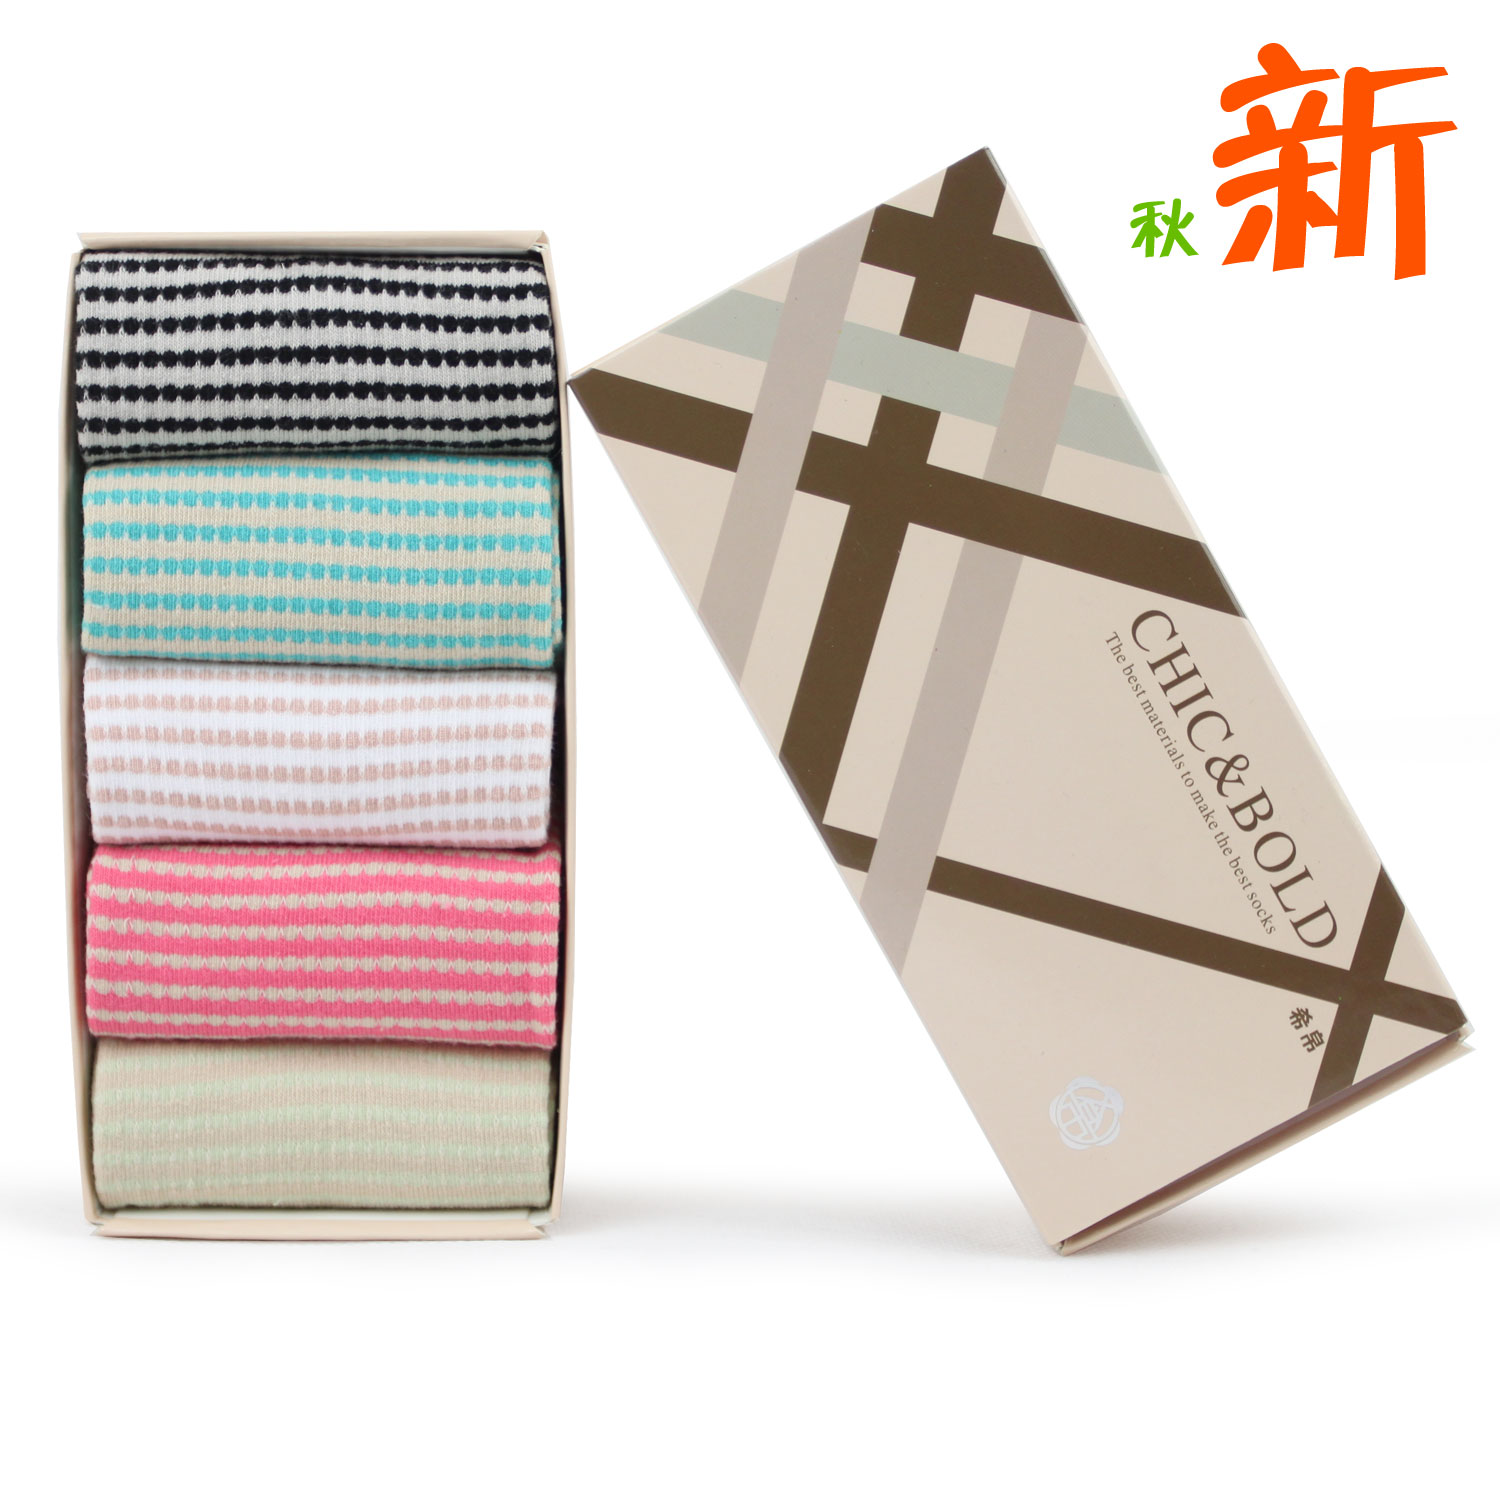 Free 1set/5pairs female 100% cotton stripe rib top women's socks boxed fashion gift new hot